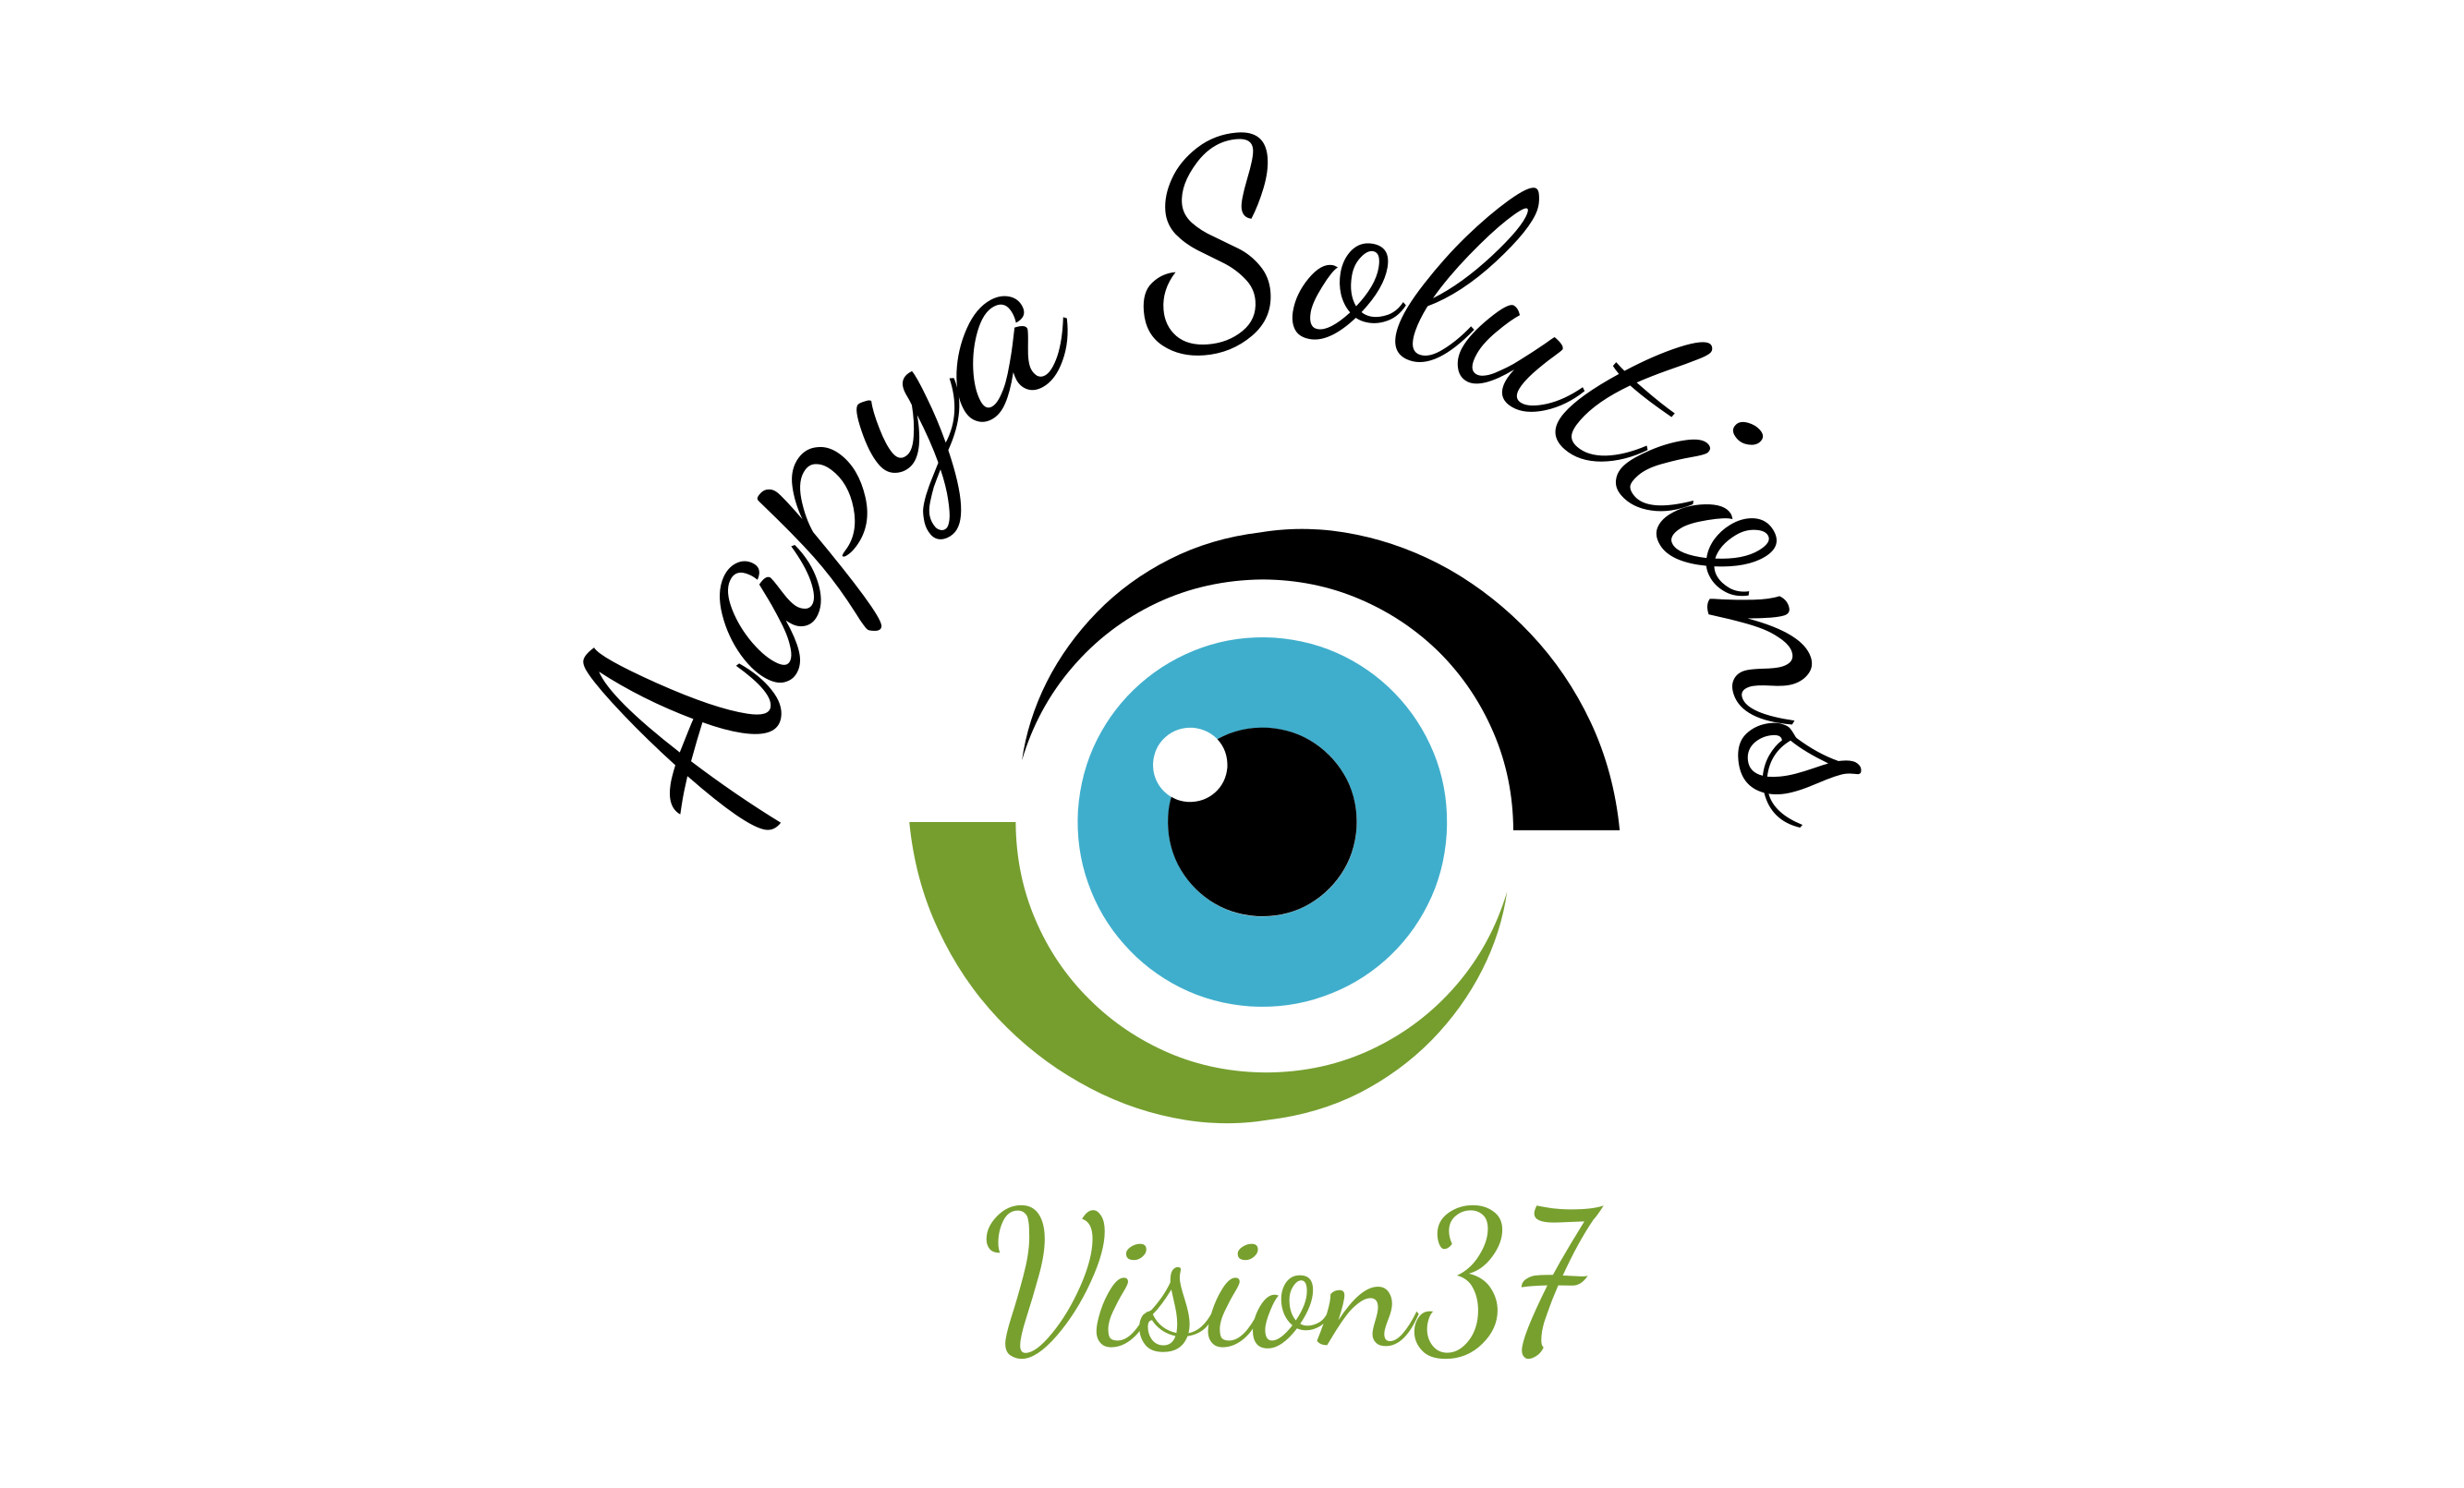 Vision37